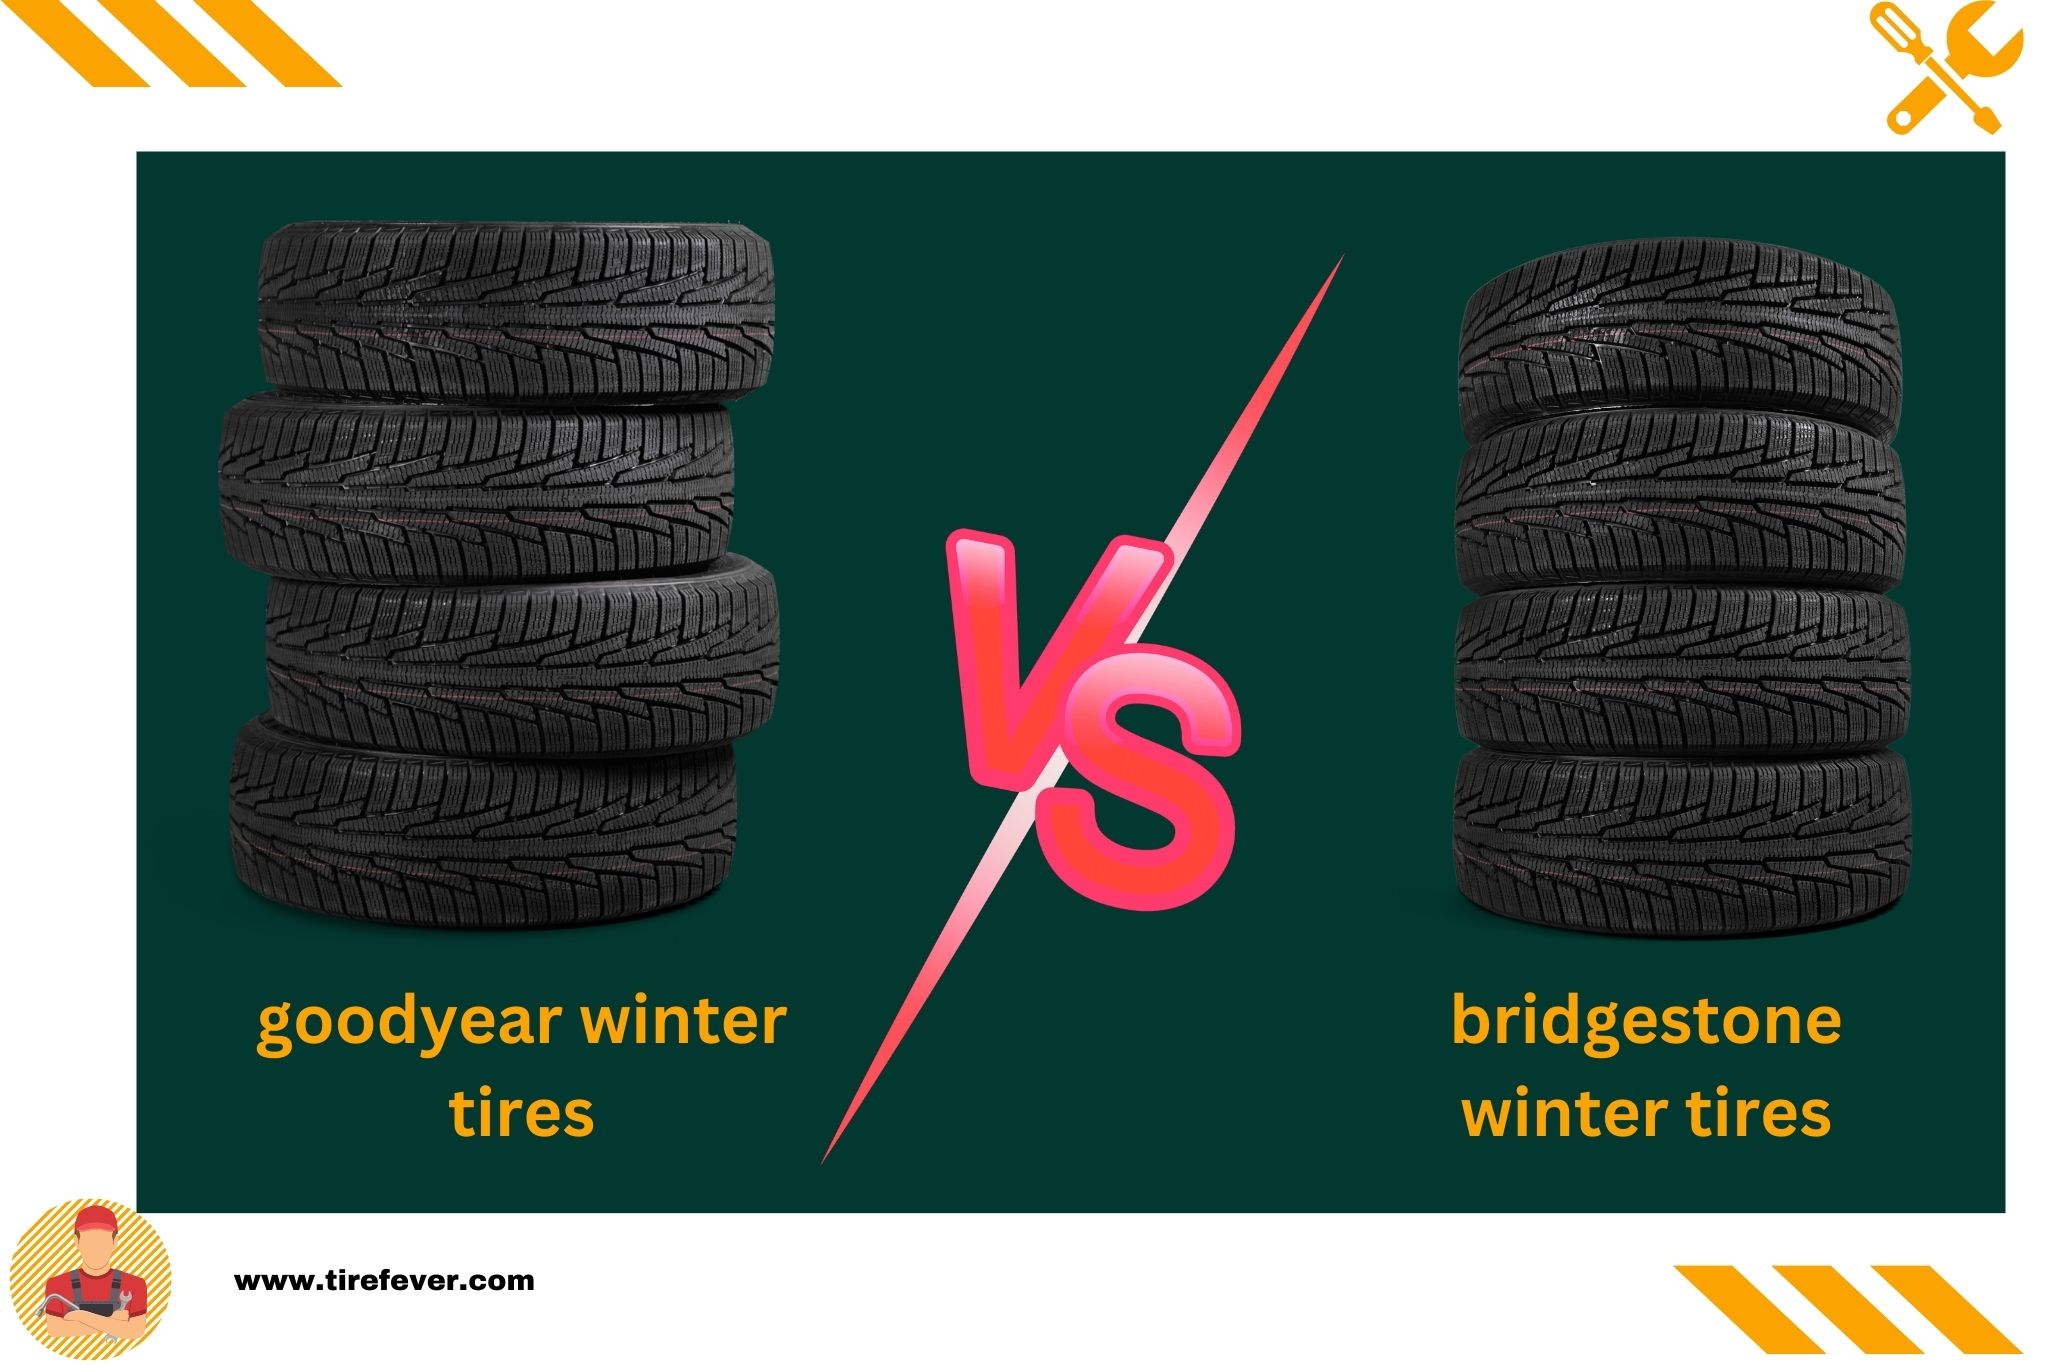 goodyear winter tires vs bridgestone winter tires